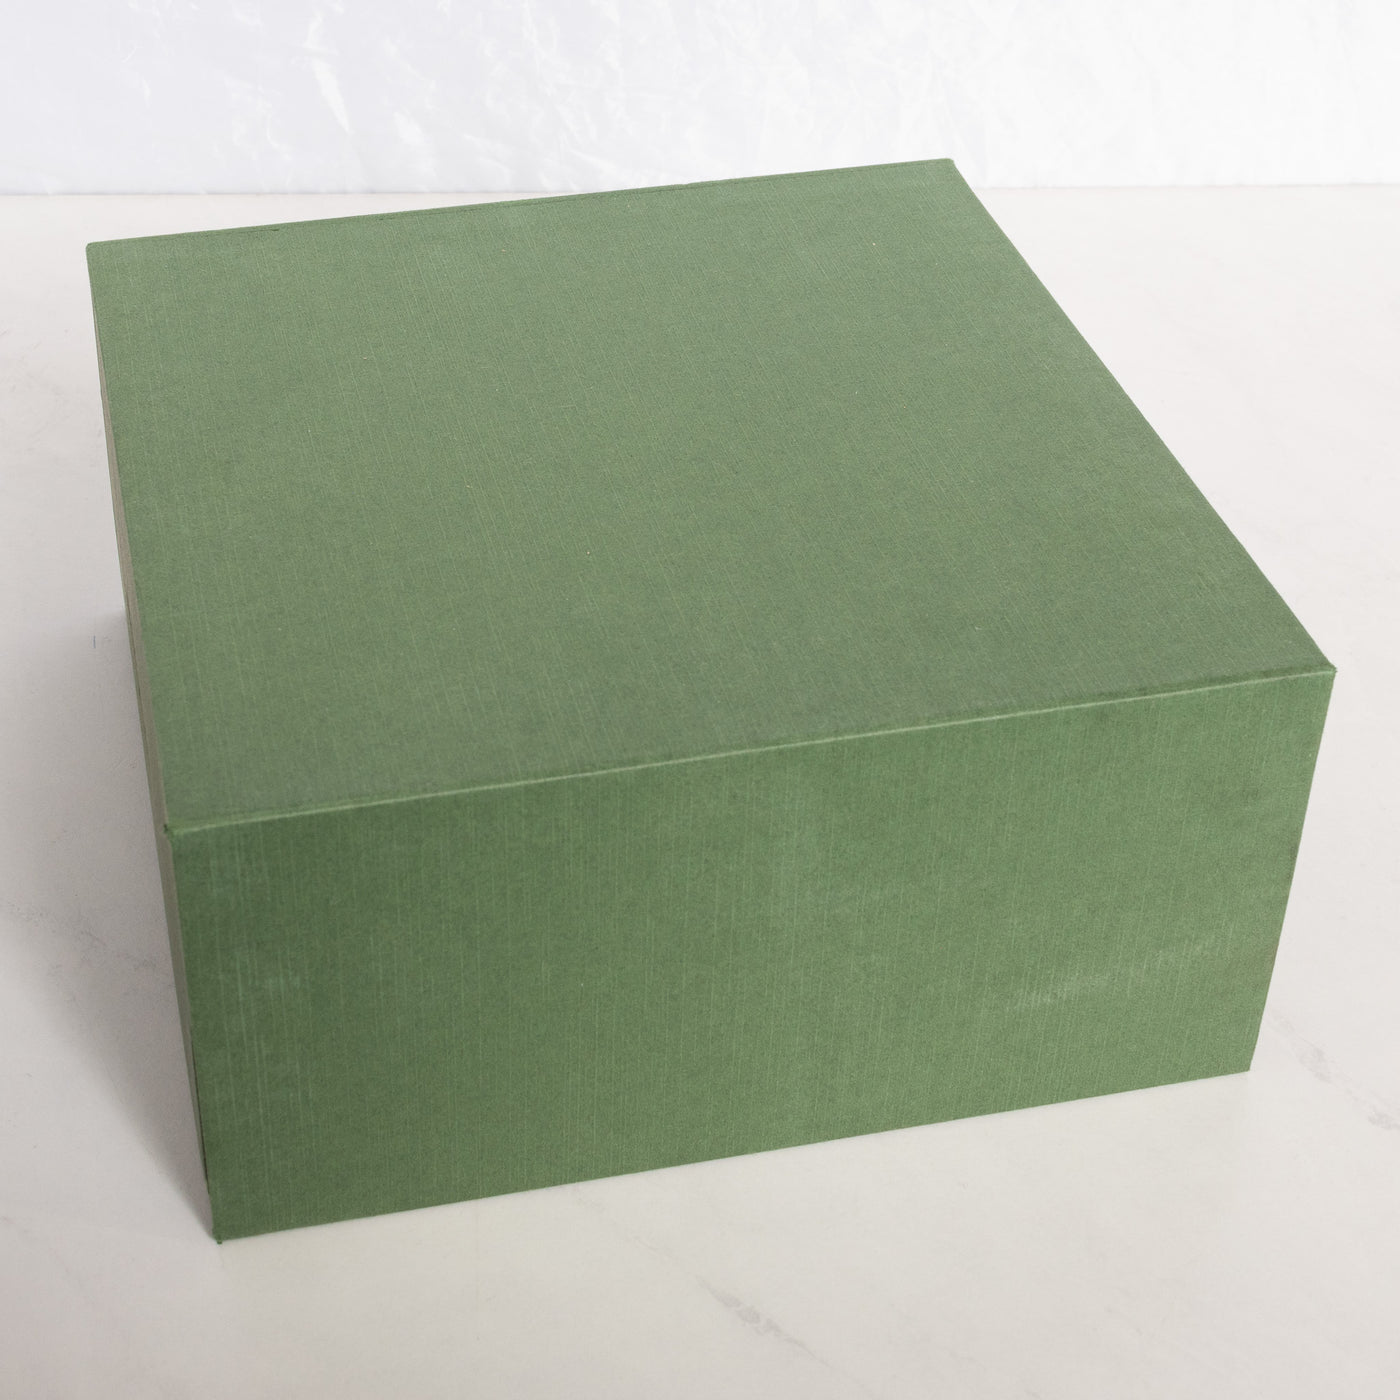 Montegrappa Green Box Packaging